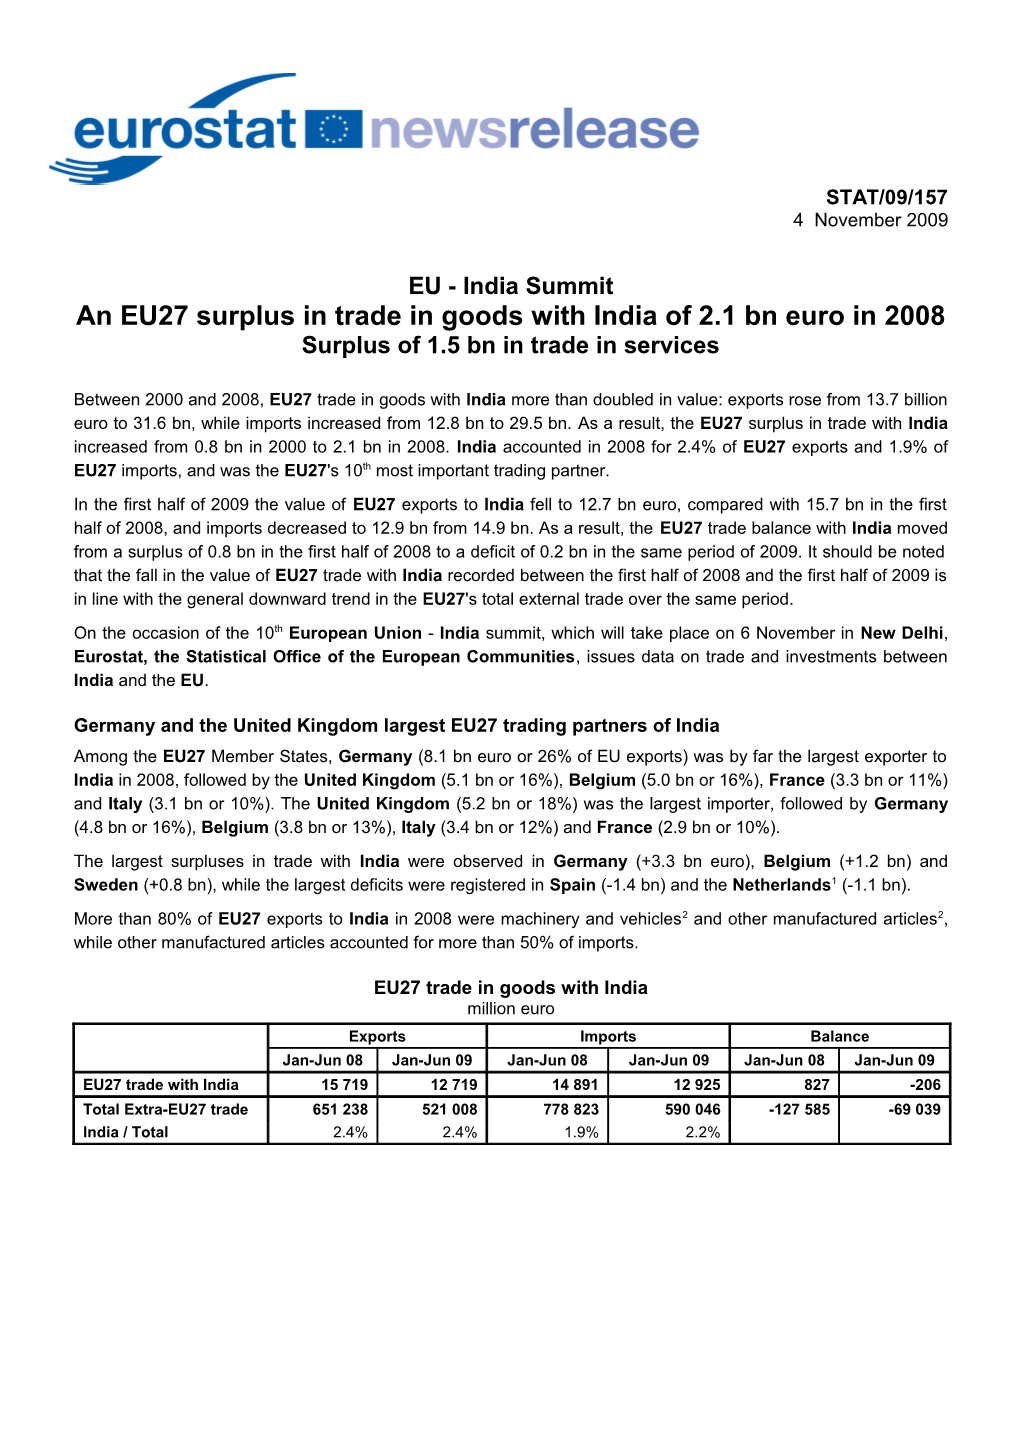 EU - India Summit an EU27 Surplus in Trade in Goods with Indiaof 2.1 Bn Euro in 2008 Surplus